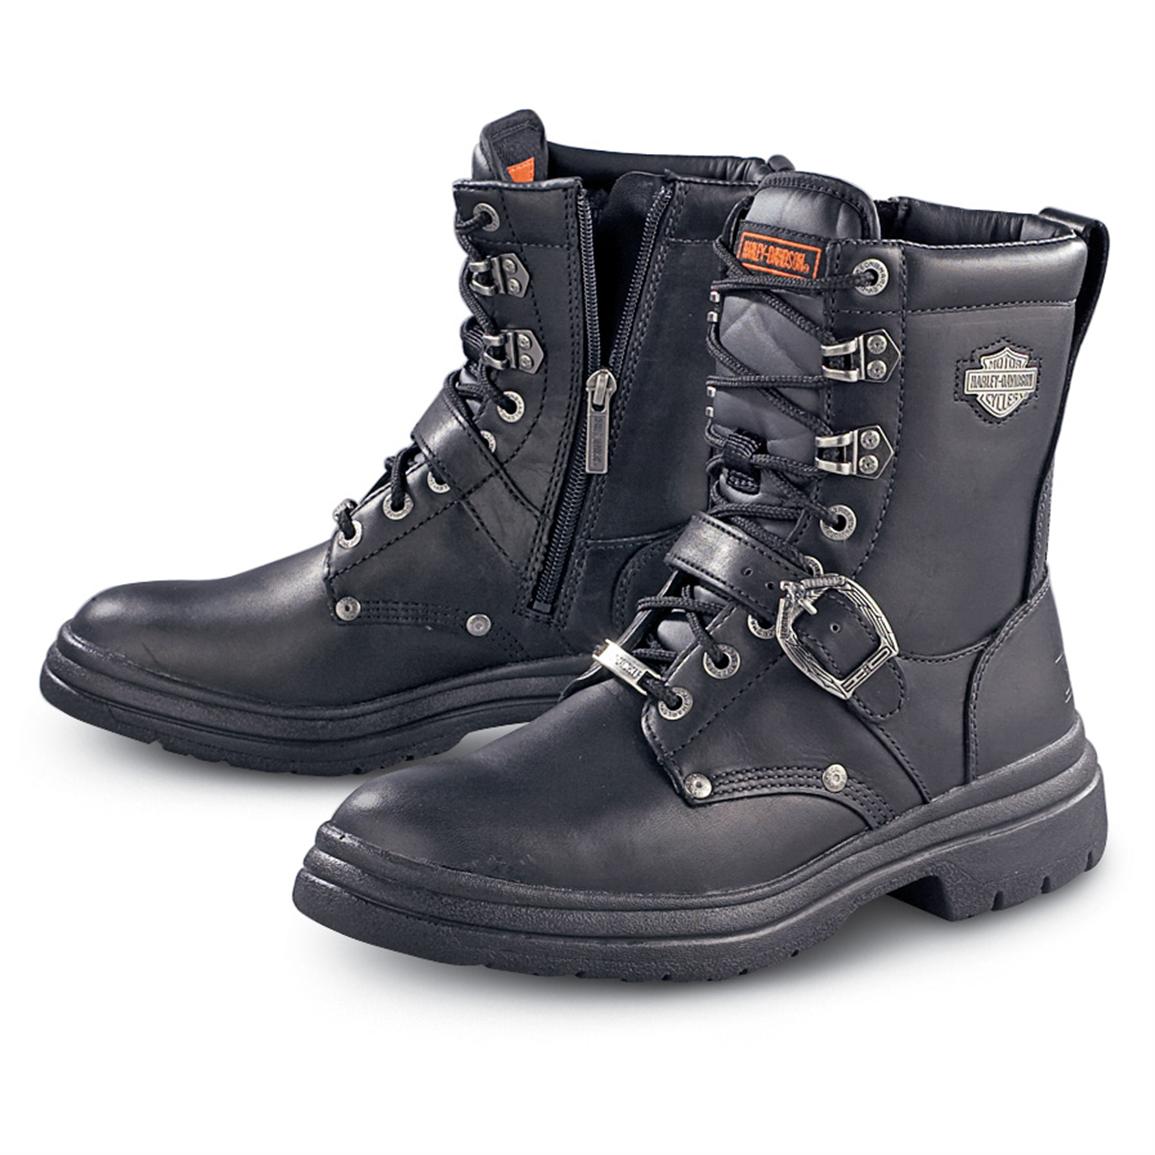 Men's Harley-Davidson® Flex Boots, Black - 101717, Motorcycle & Biker